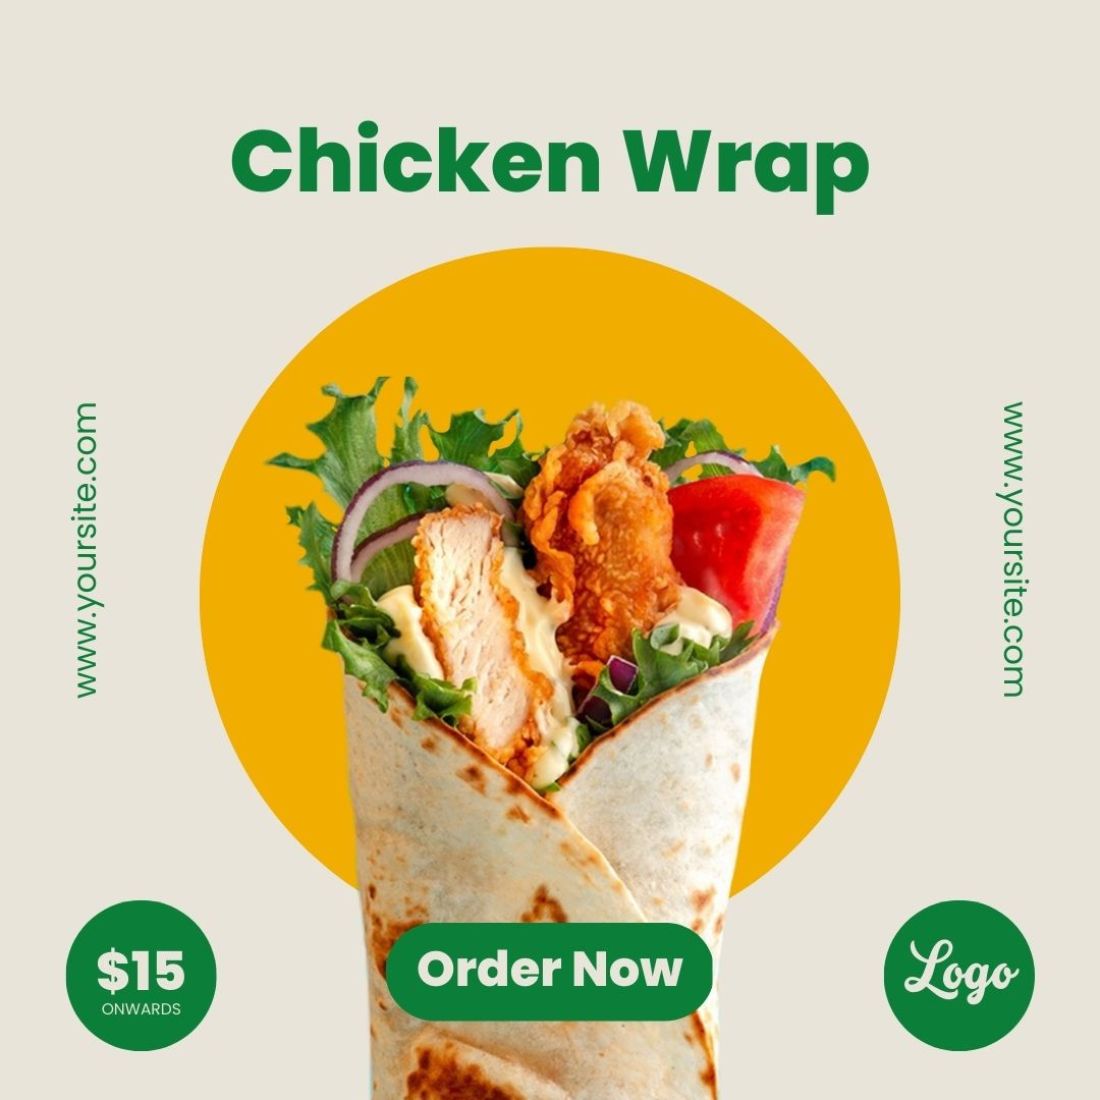 Modern Chicken Wrap Order Social Media Template cover image.